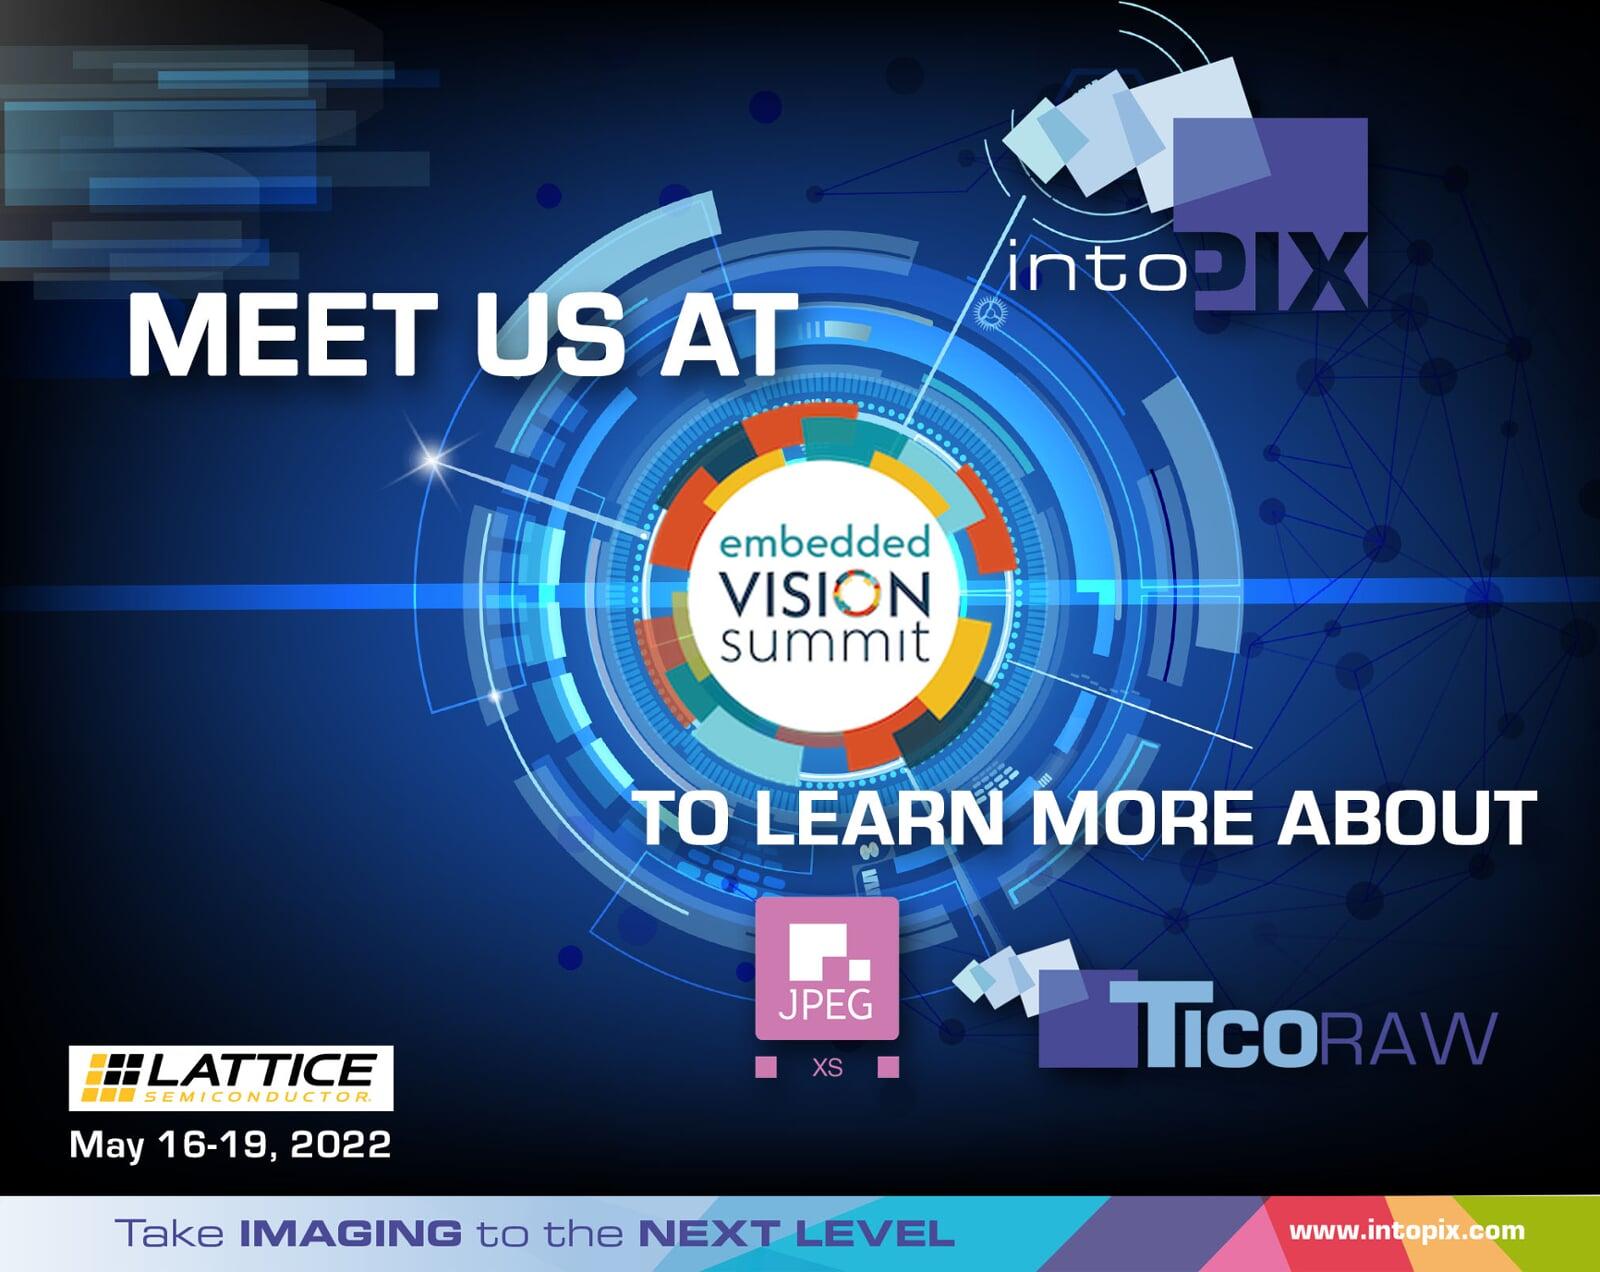 intoPIXは、Embedded Vision Summit 2022のLattice社ブースで、軽量圧縮IPを展示します。